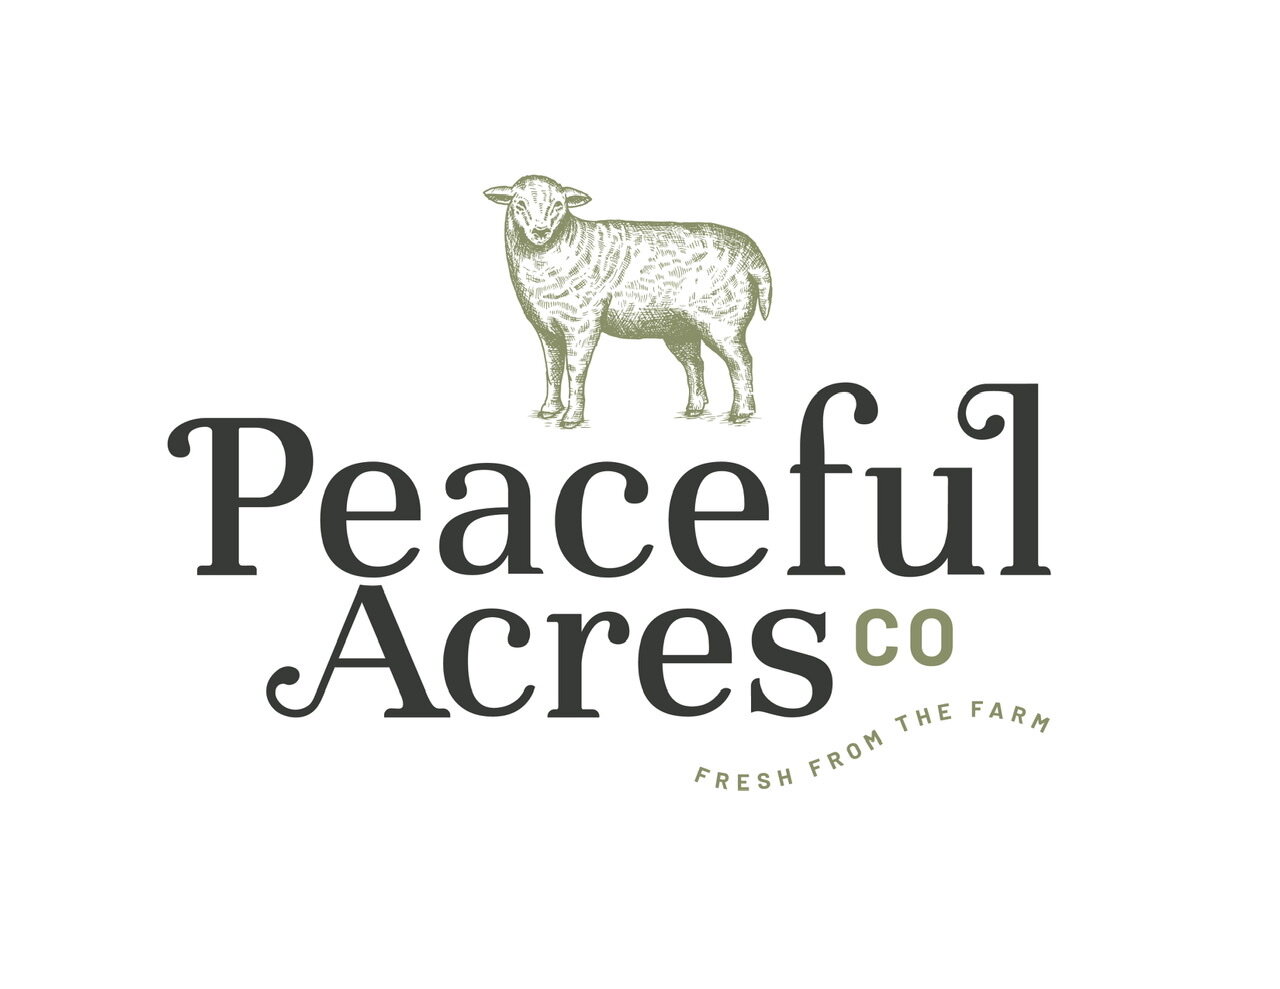 Peaceful Acres Co